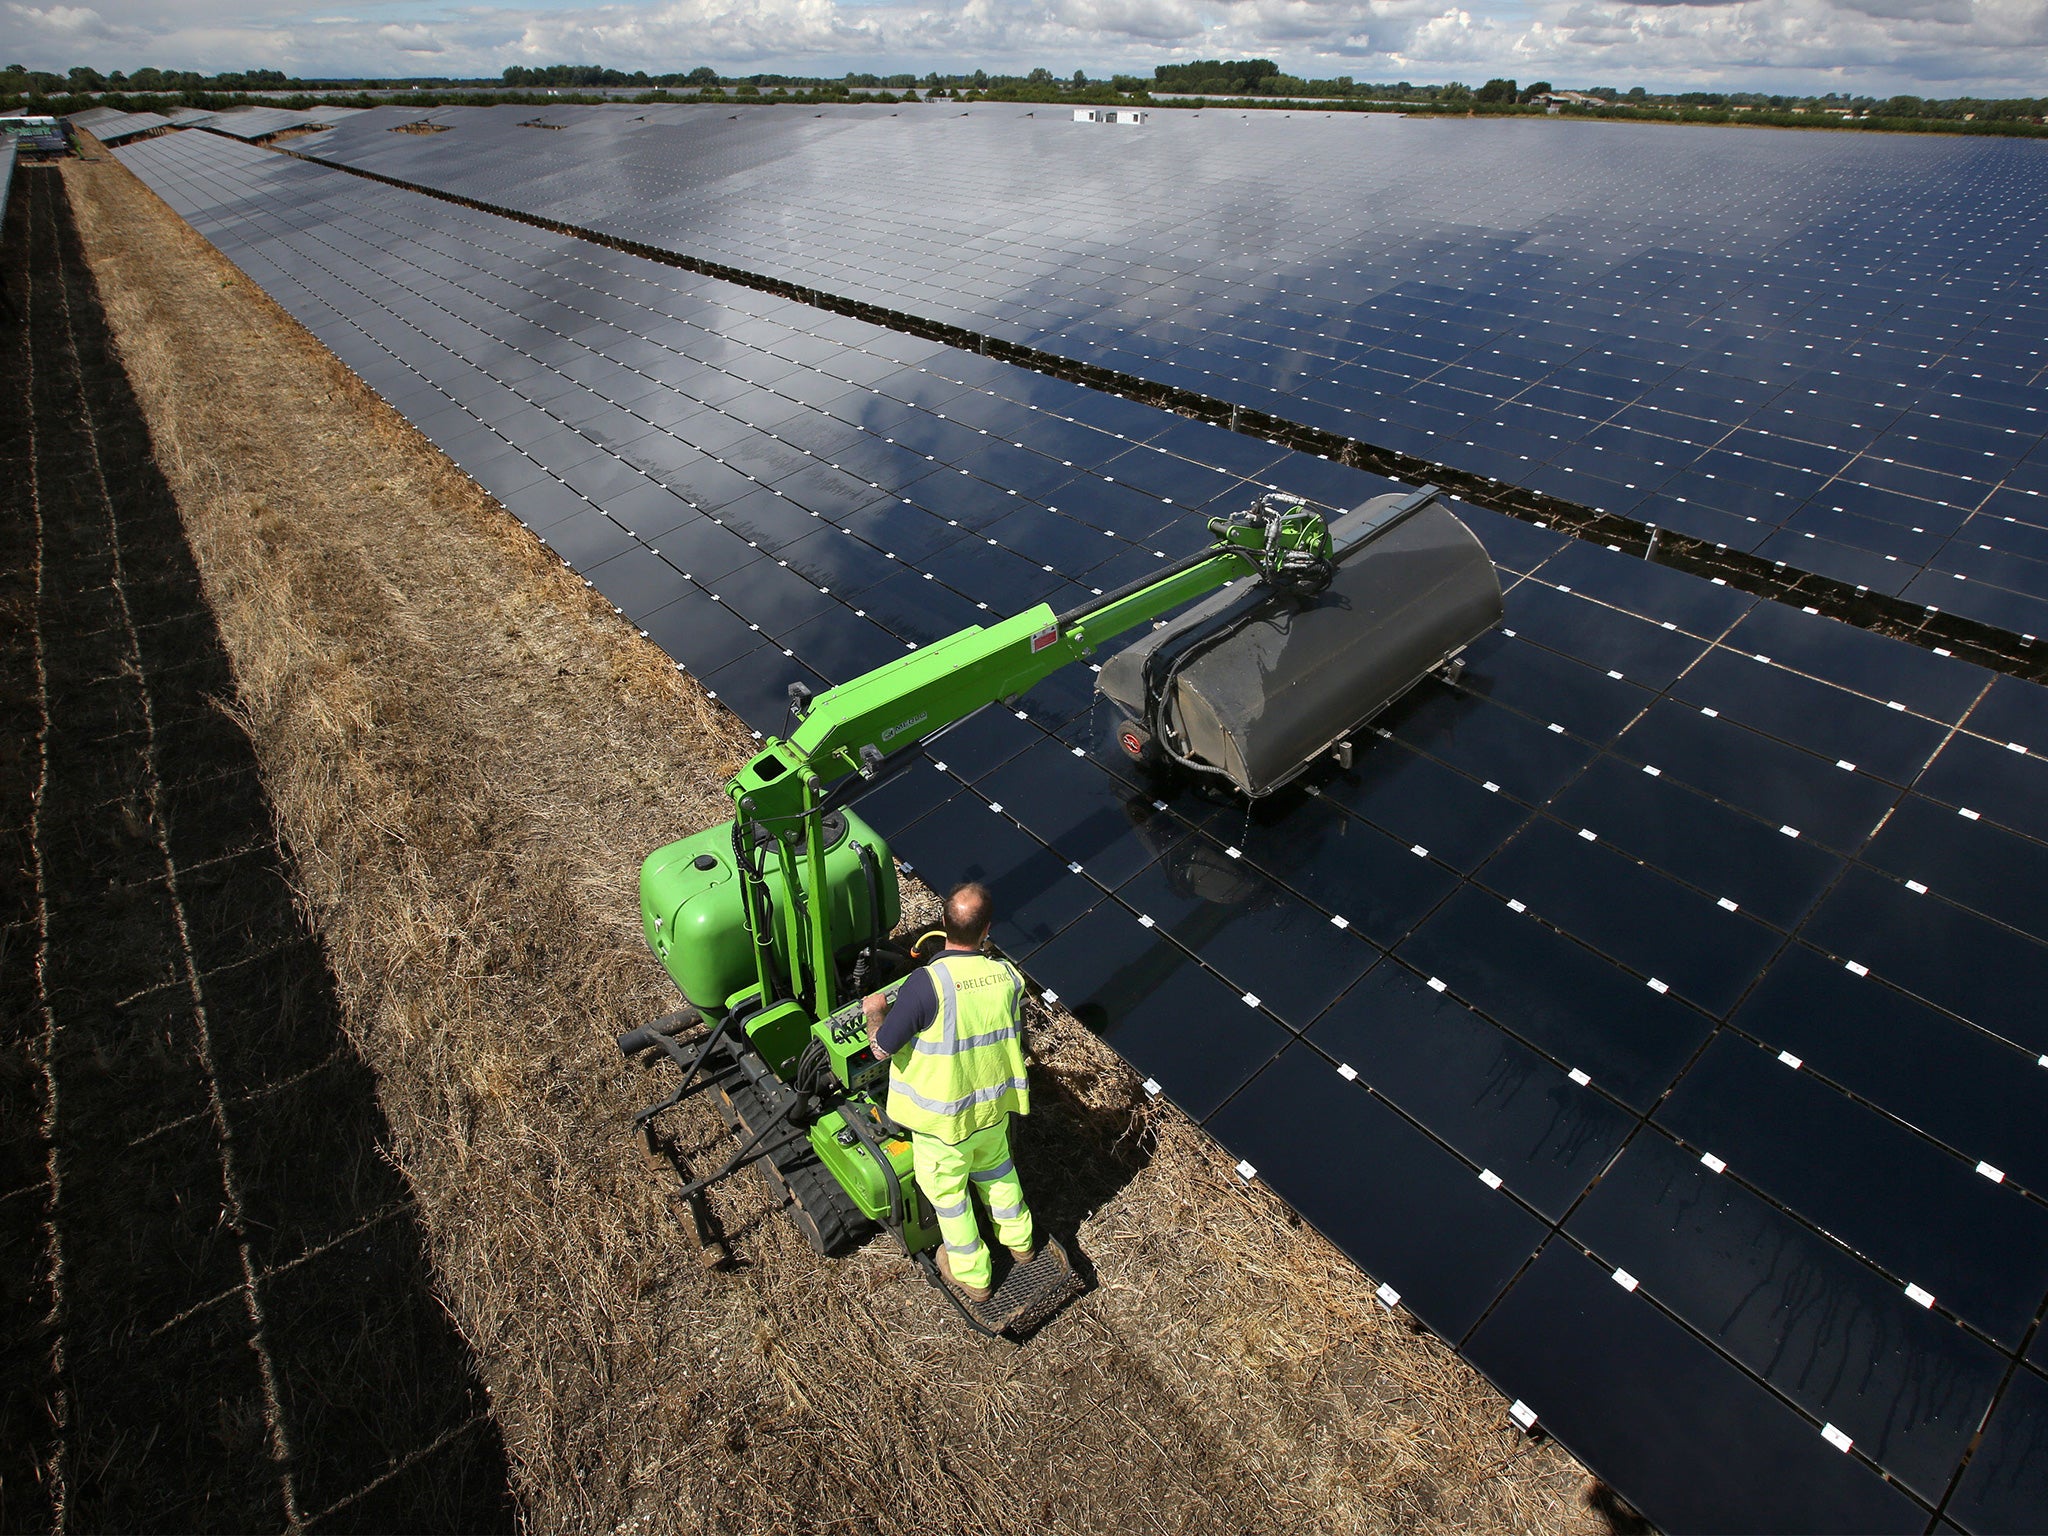 A workman uses a machine to clean panels at Landmead solar farm on July 29, 2015 near Abingdon, England